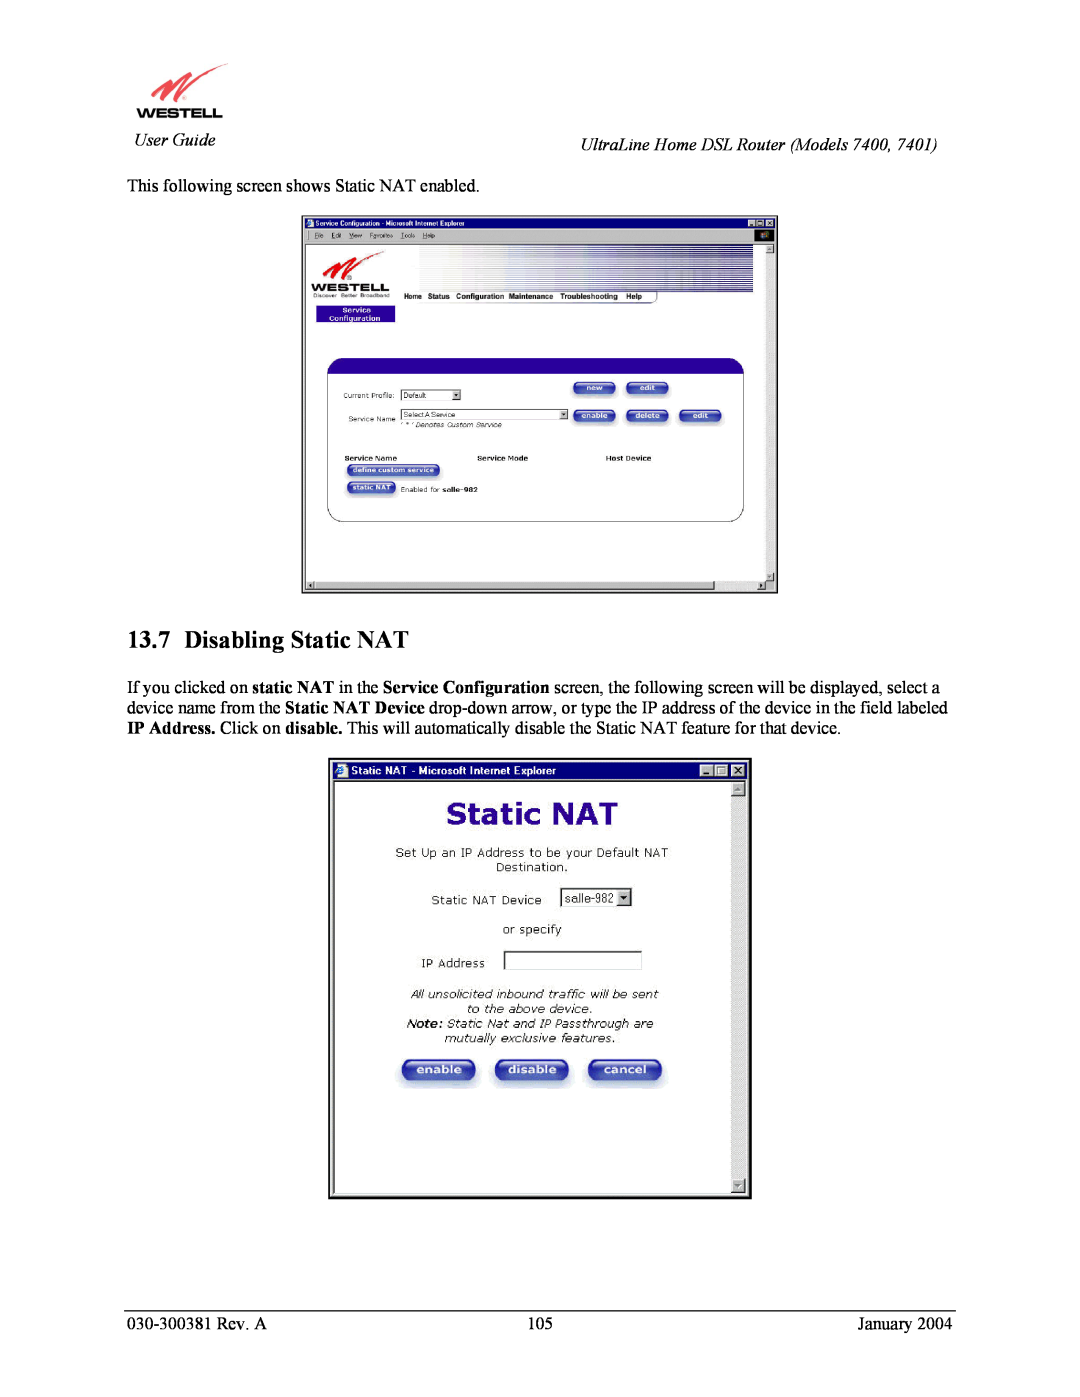 Westell Technologies 7400, 7401 manual Disabling Static NAT 